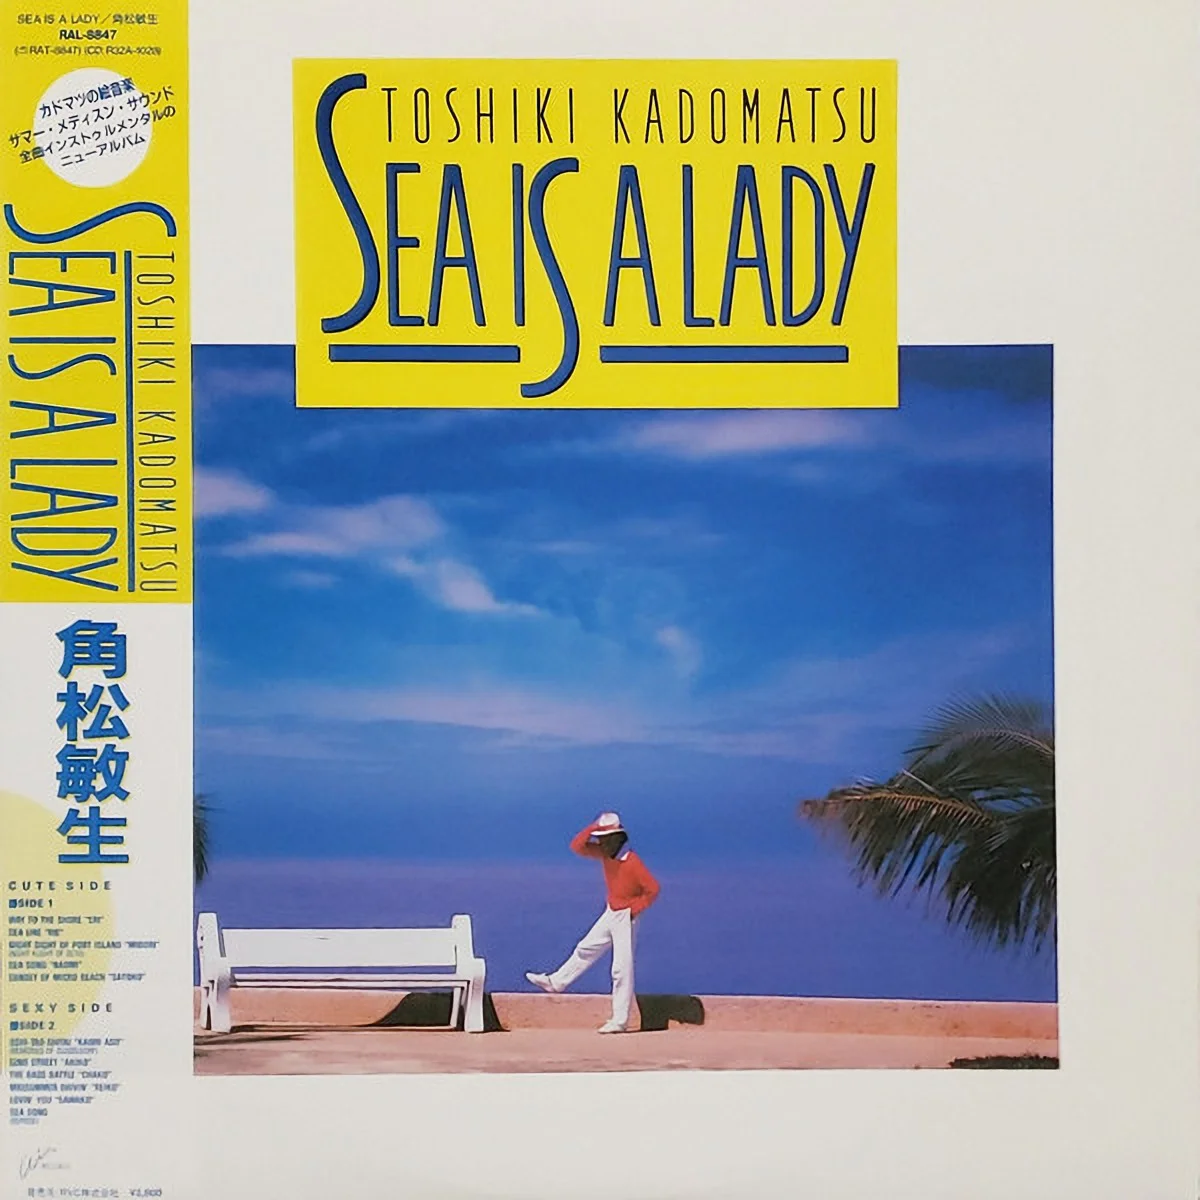 Sea Line / 角松敏生 / Sea Is A Lady / 1987